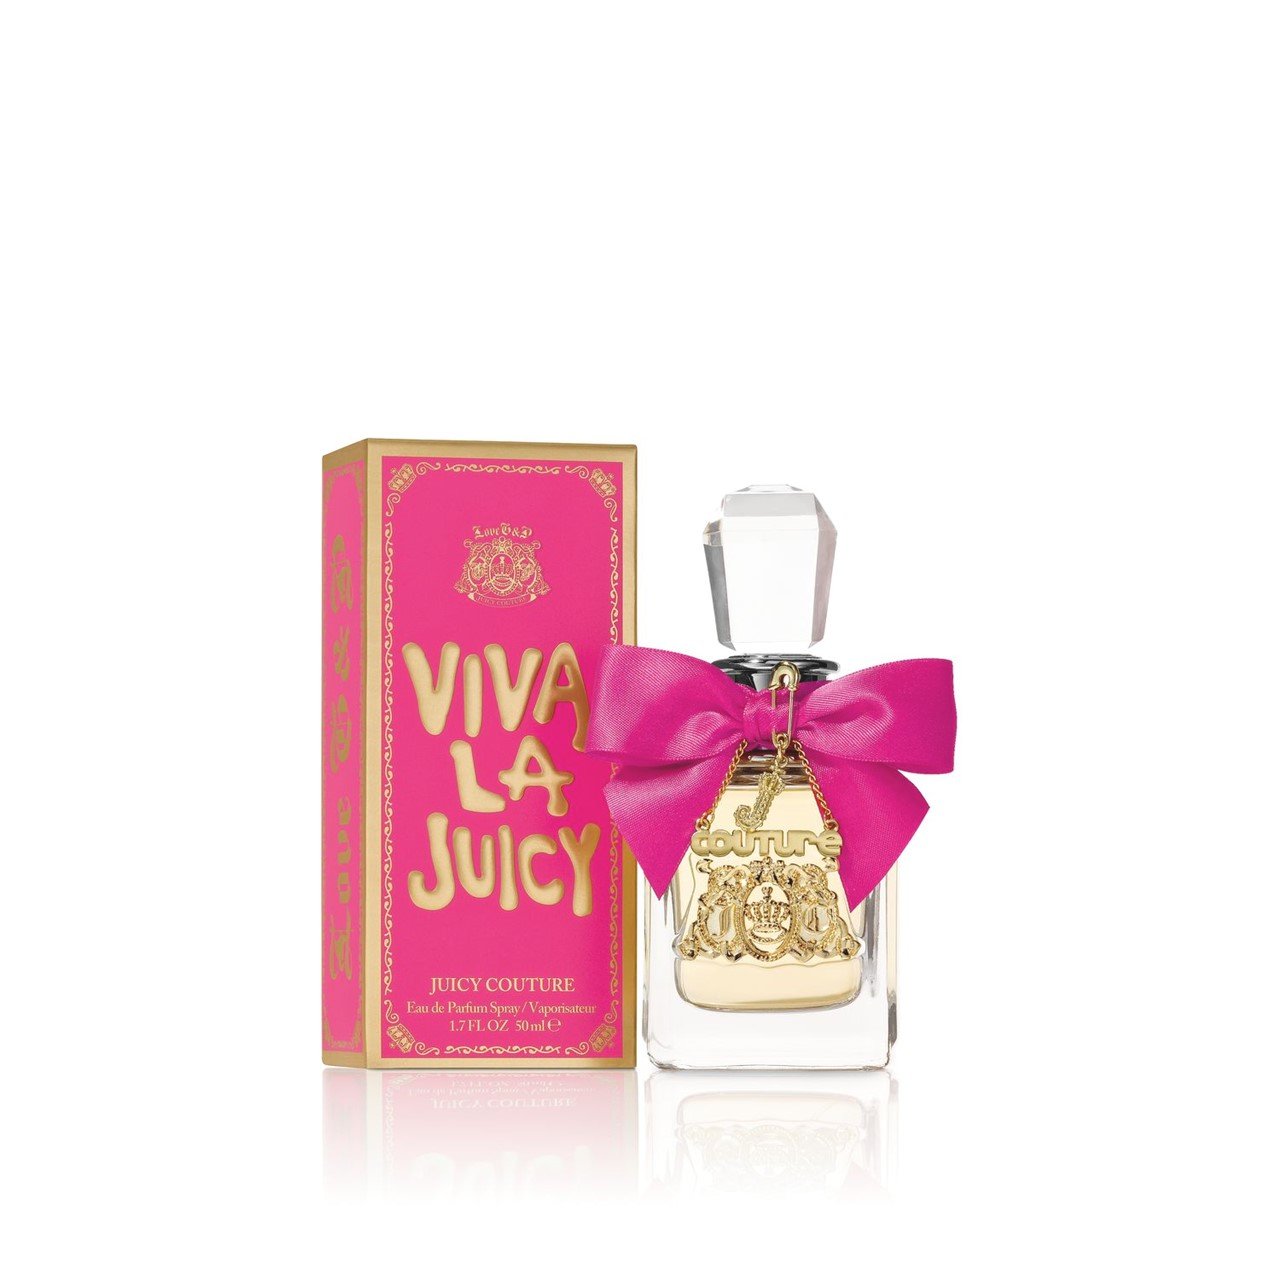 Juicy Couture Viva La Juicy Eau de Parfum 50ml (1.7fl oz)